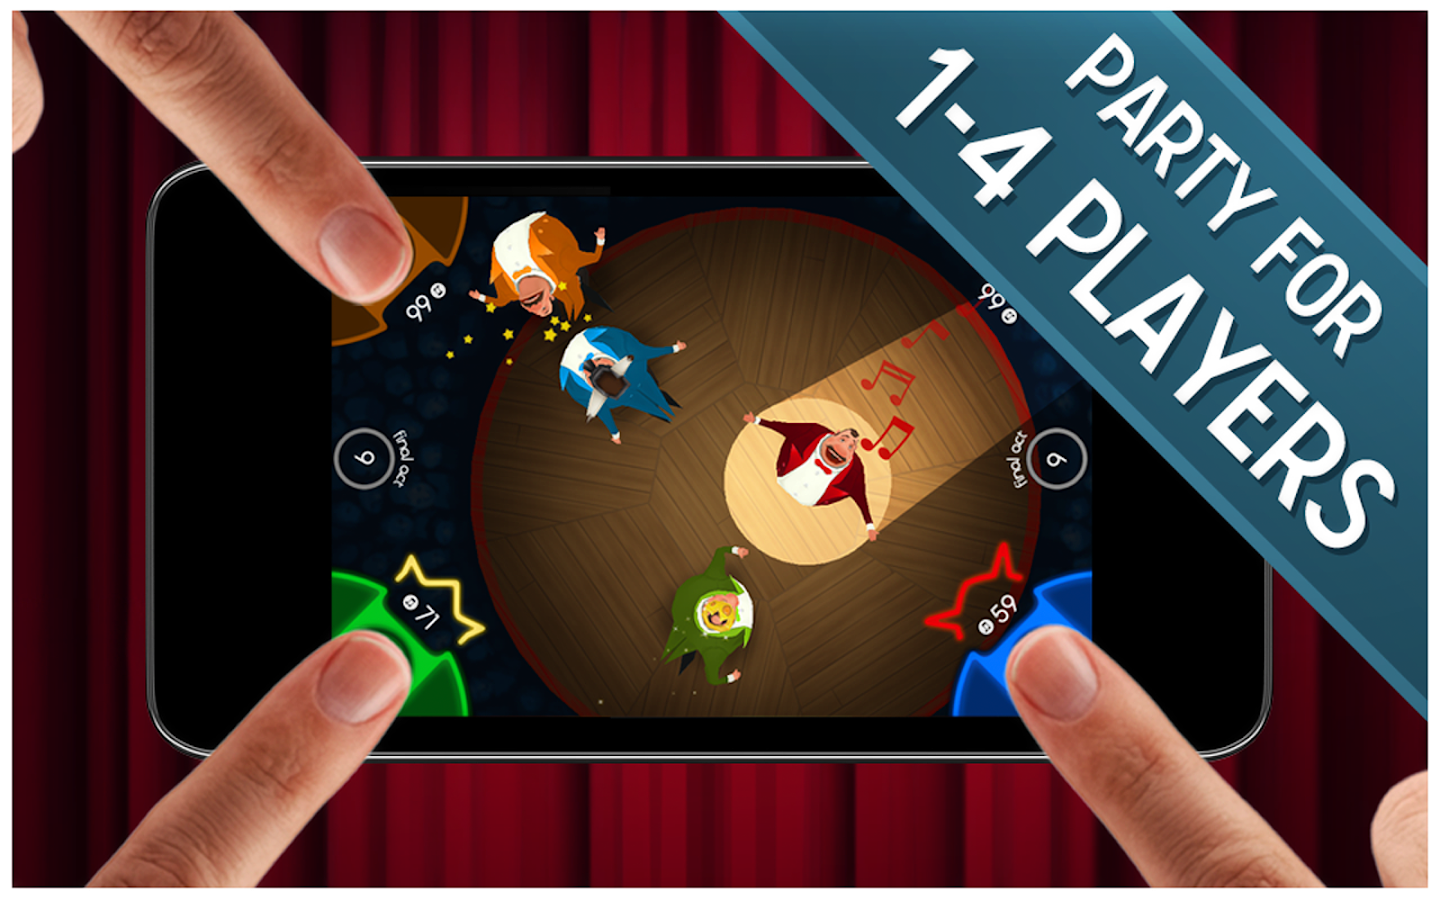 King of Opera - Party Game! - screenshot